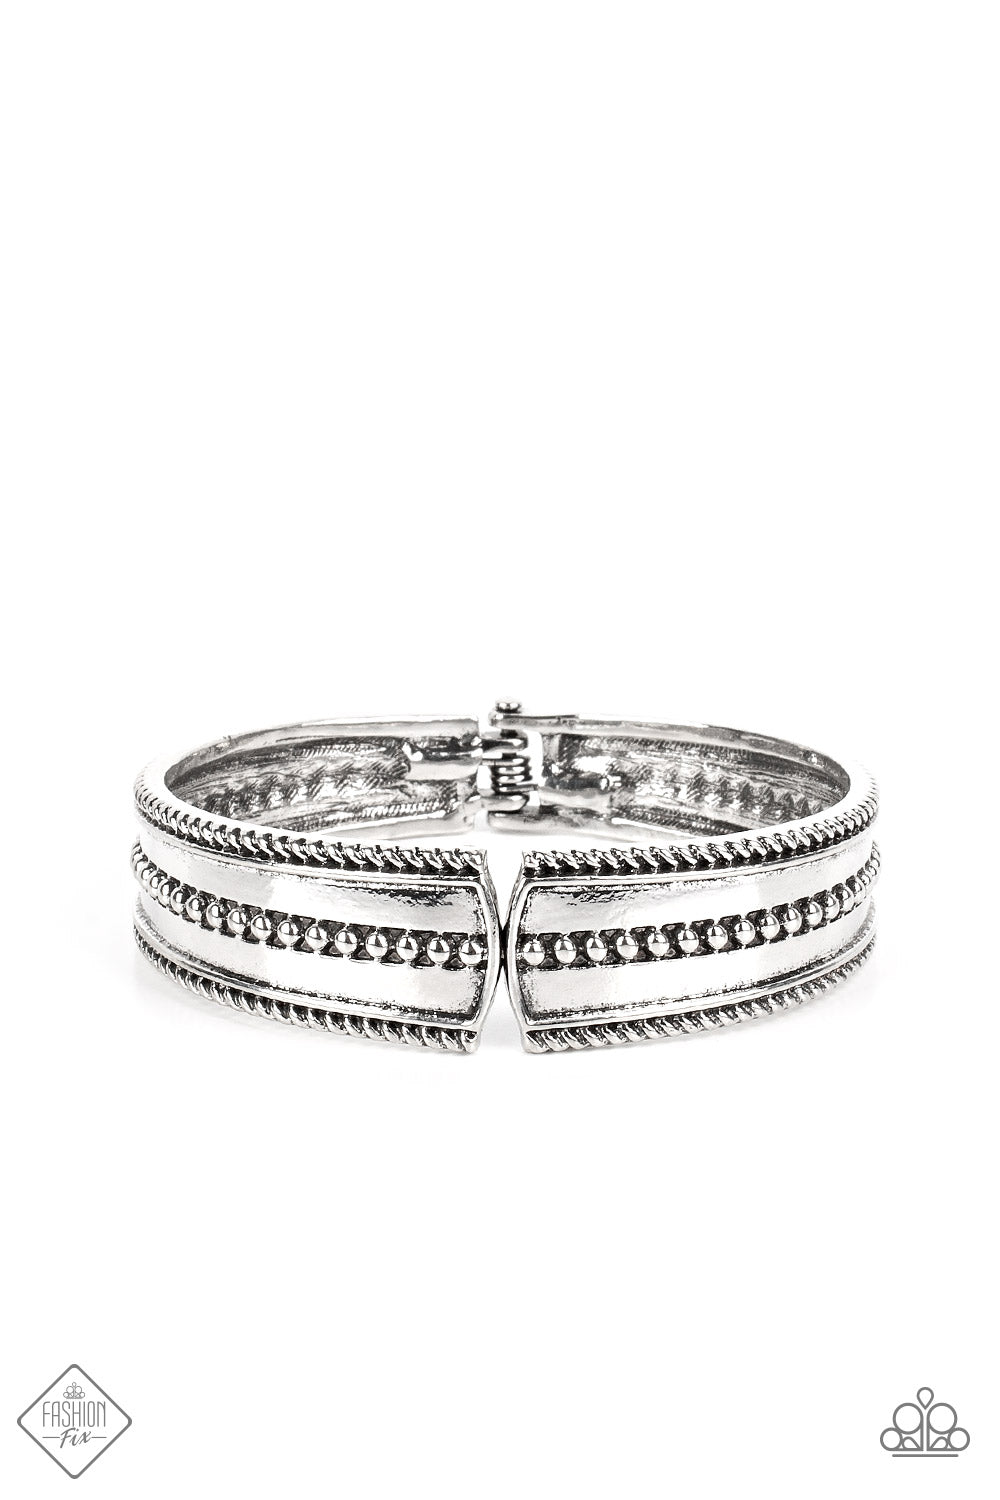 paparazzi-accessories-tributary-treasure-silver-bracelet